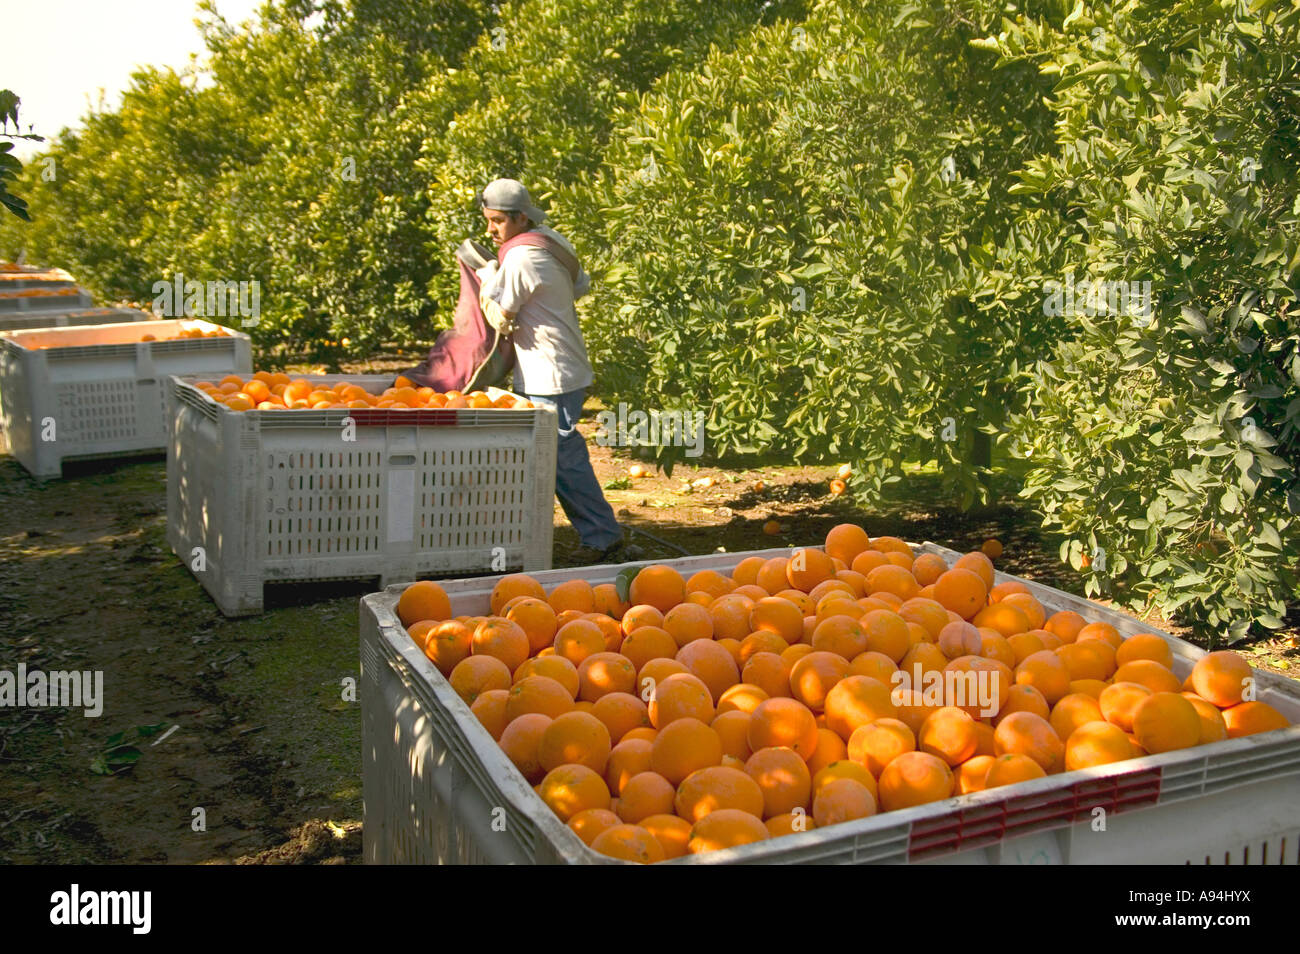 https://c8.alamy.com/comp/A94HYX/farm-worker-depositing-harvested-washington-navel-oranges-into-field-A94HYX.jpg